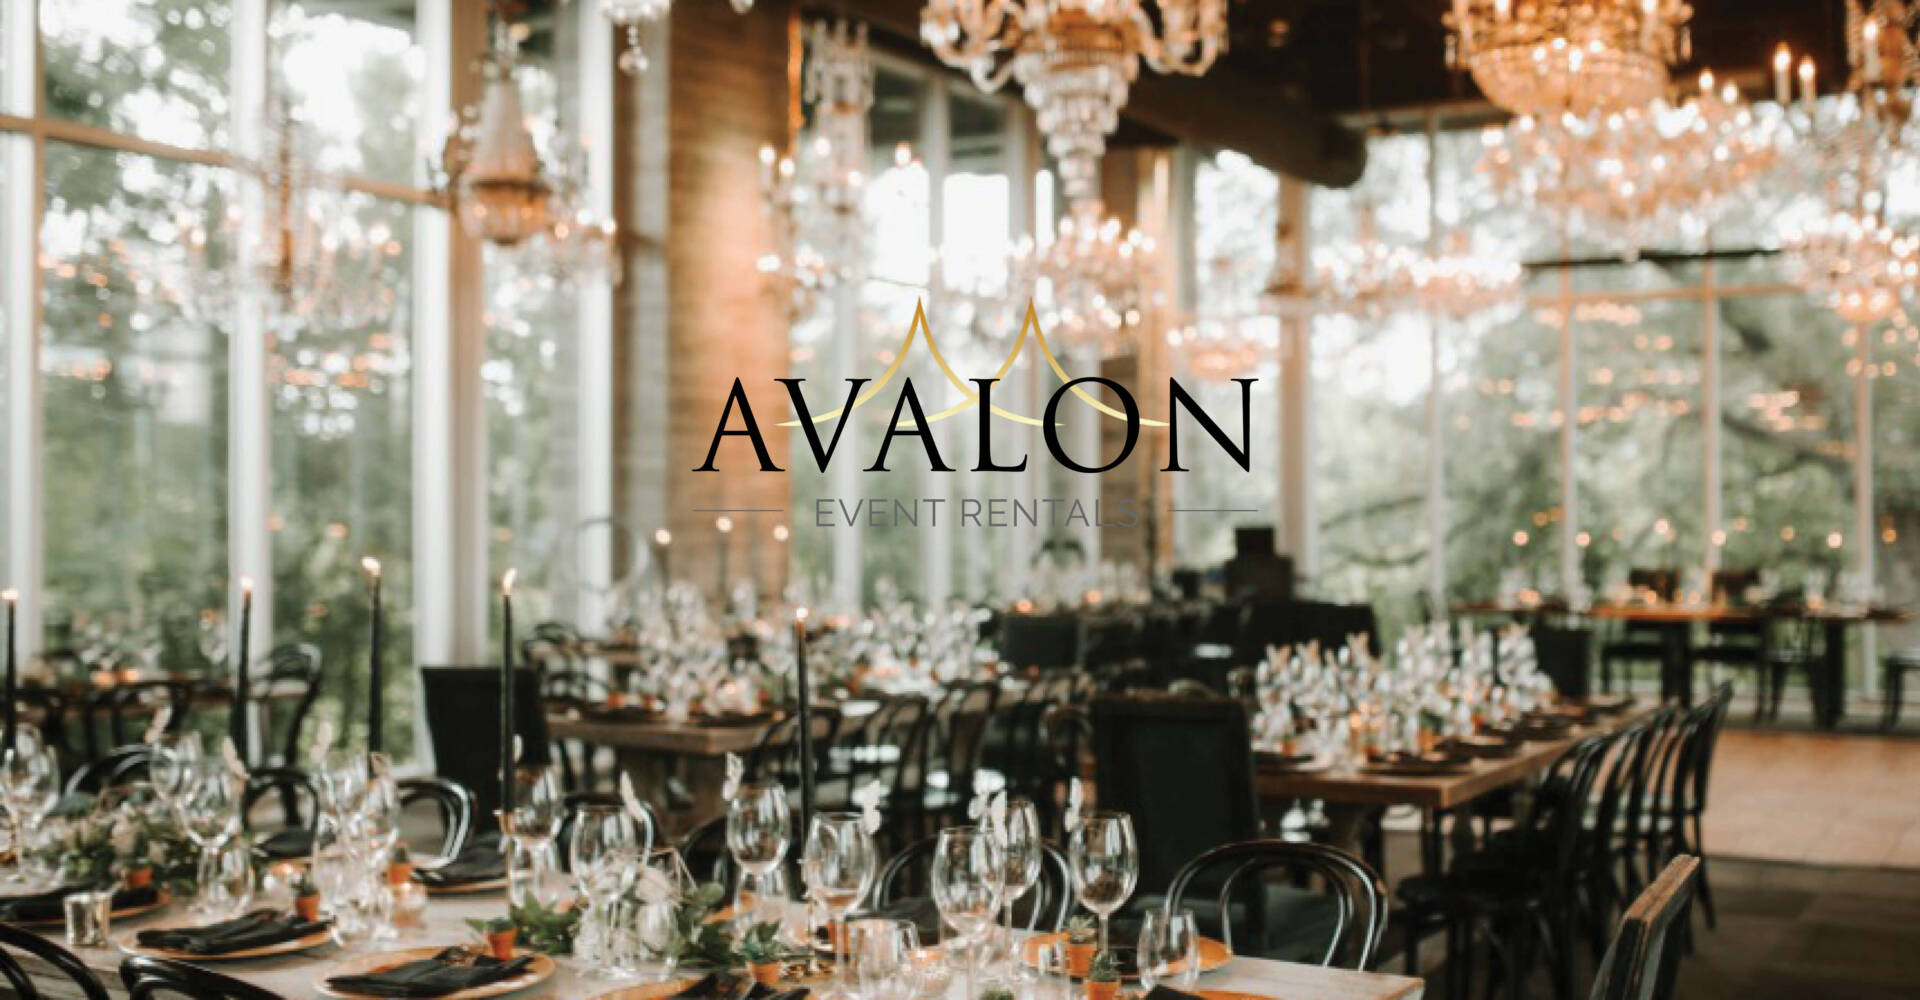 Avalon Event Rentals Houston Wedding Event Rental Company Branding